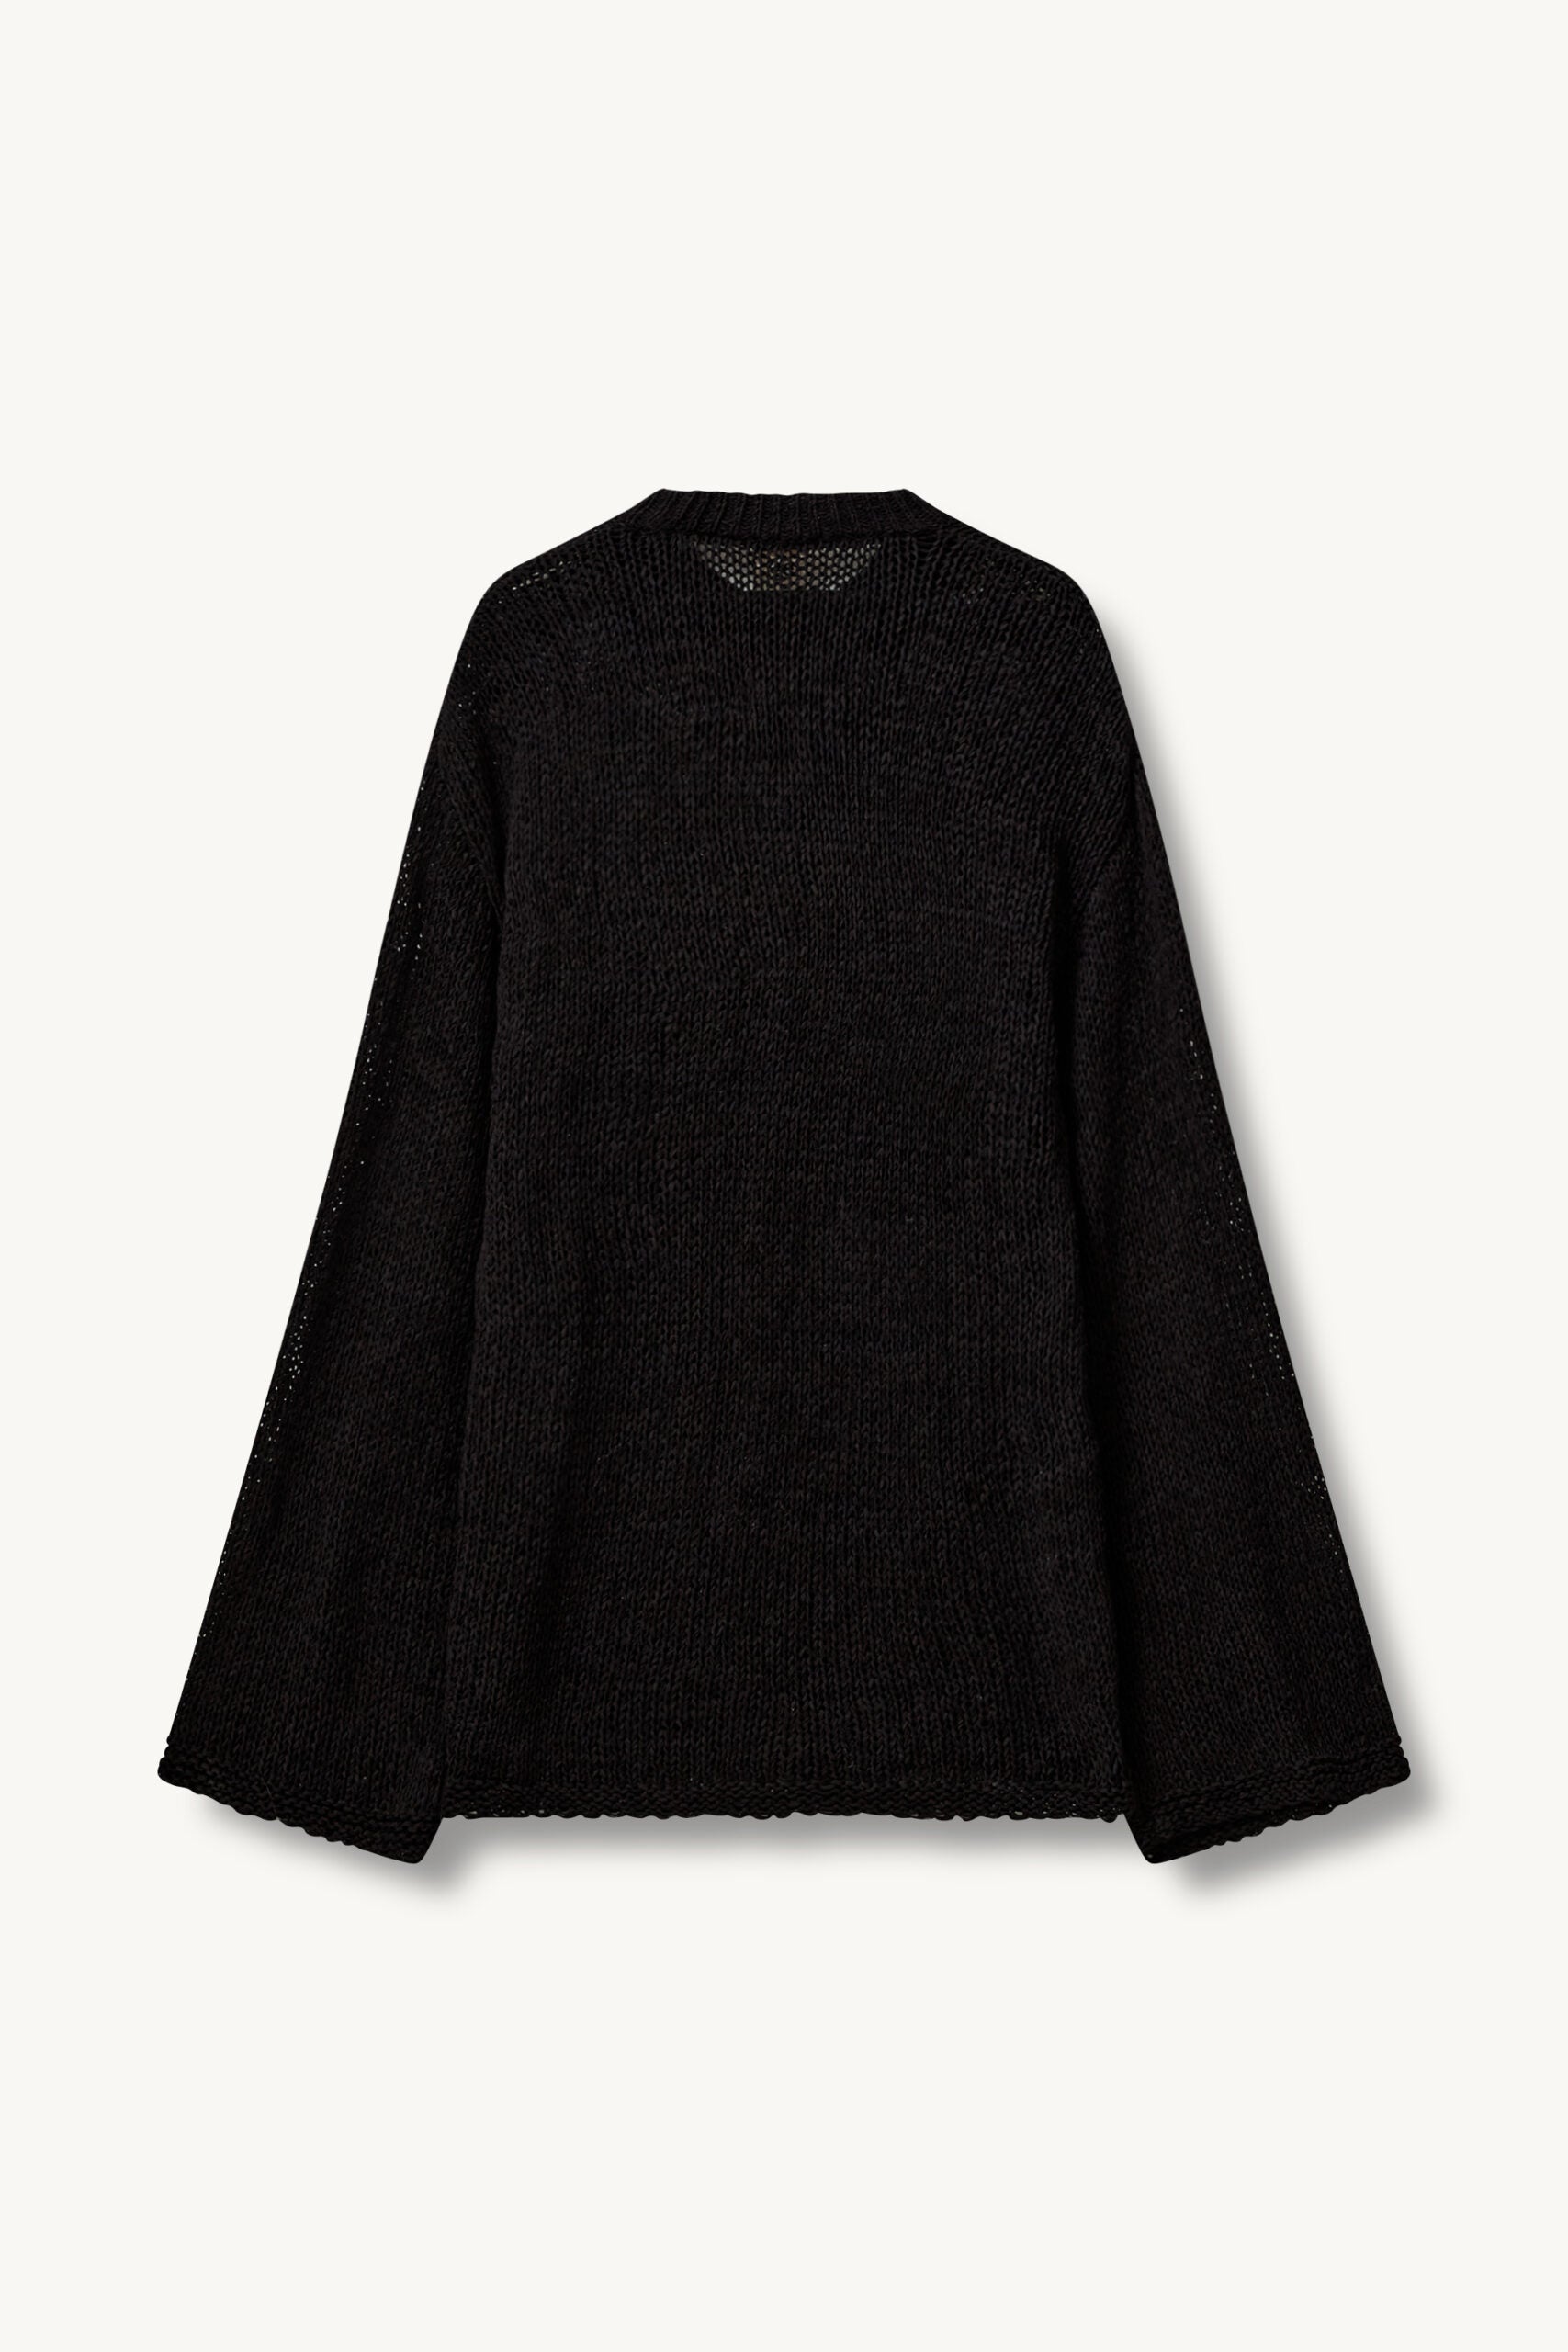 The Garment Literno Sweater in Black